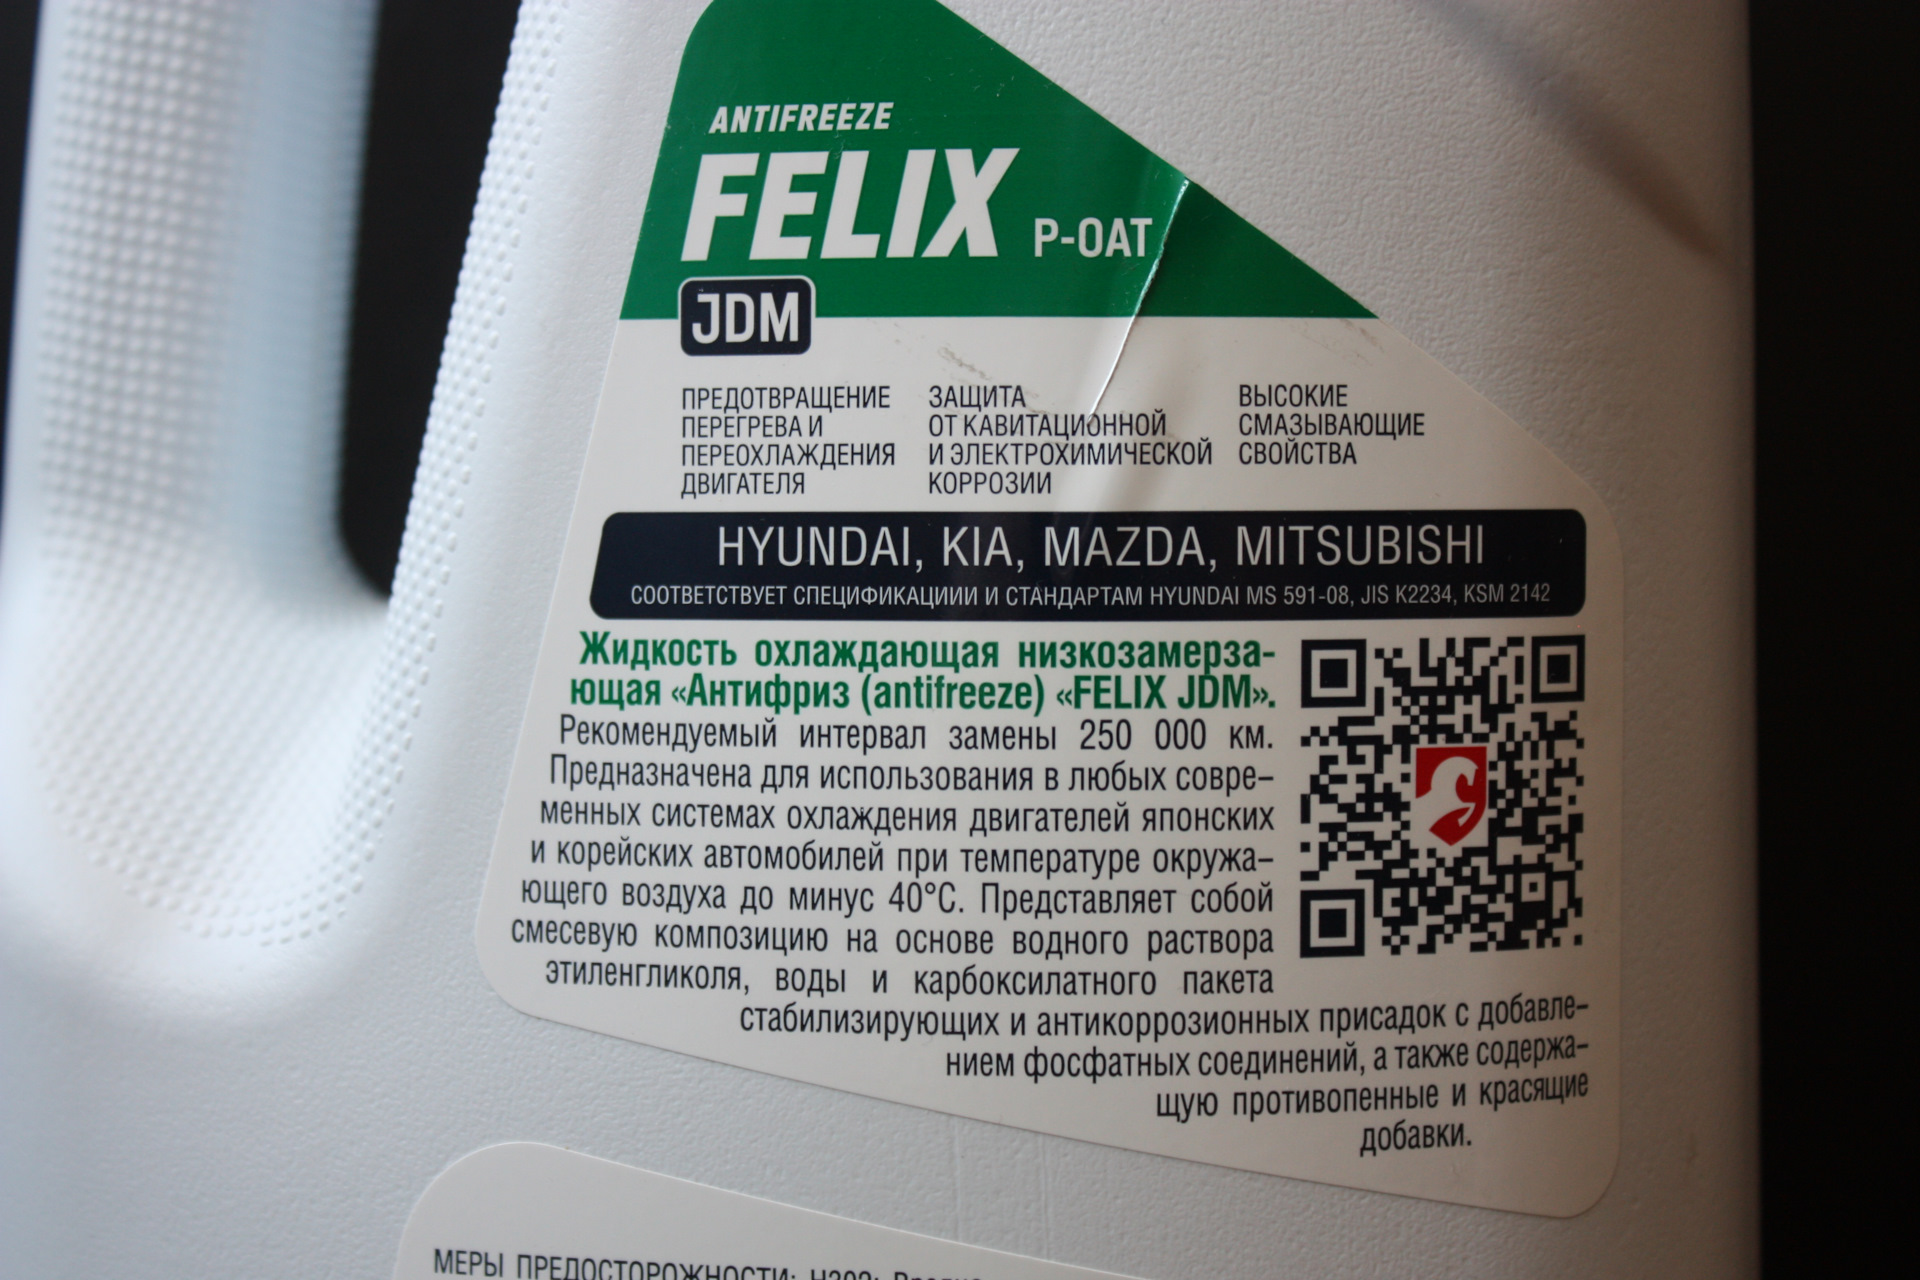 Felix jdm g12. 430206330 Антифриз Felix. Jis k2234 антифриз. Антифриз Felix JDM g12++ зеленый -45°с 5 л.